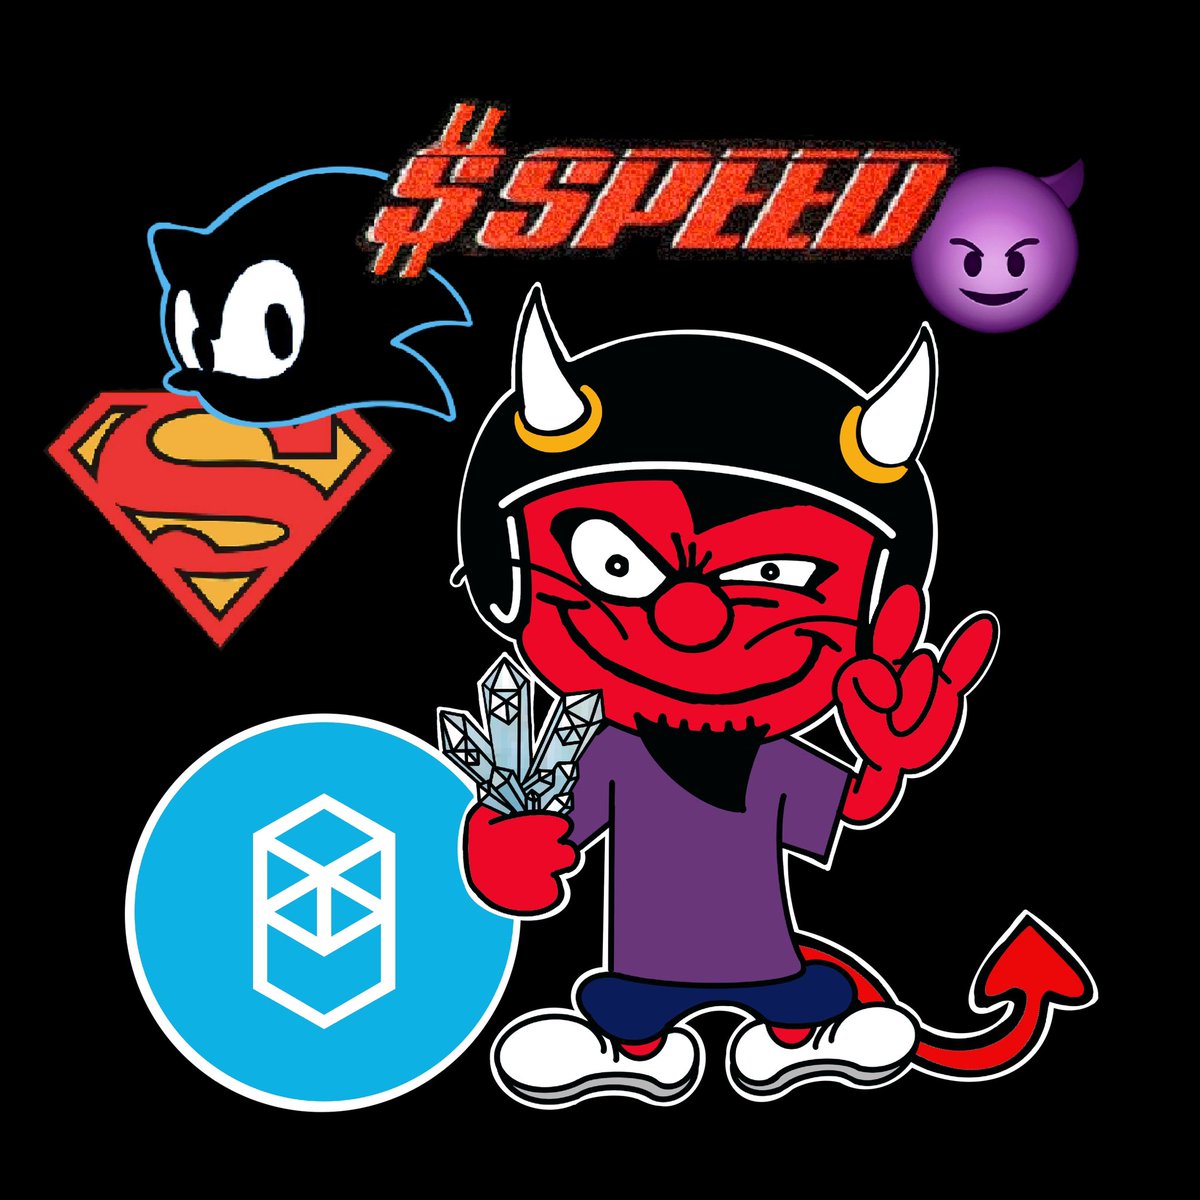 #SuperSonicSpeedDemon Links 😈💩

Ticker: $SPEED on #Fantom $FTM 

Buy: @SpookySwap & @Equalizer0x 

CA: 0x11E9Ced89099A539897a73CECF0ba9453A639867

Dexscreener: dexscreener.com/fantom/0x1E194…

TG: t.me/speedftm

Website: sssd.lol

#needspeed #sssd #FTM $FTM